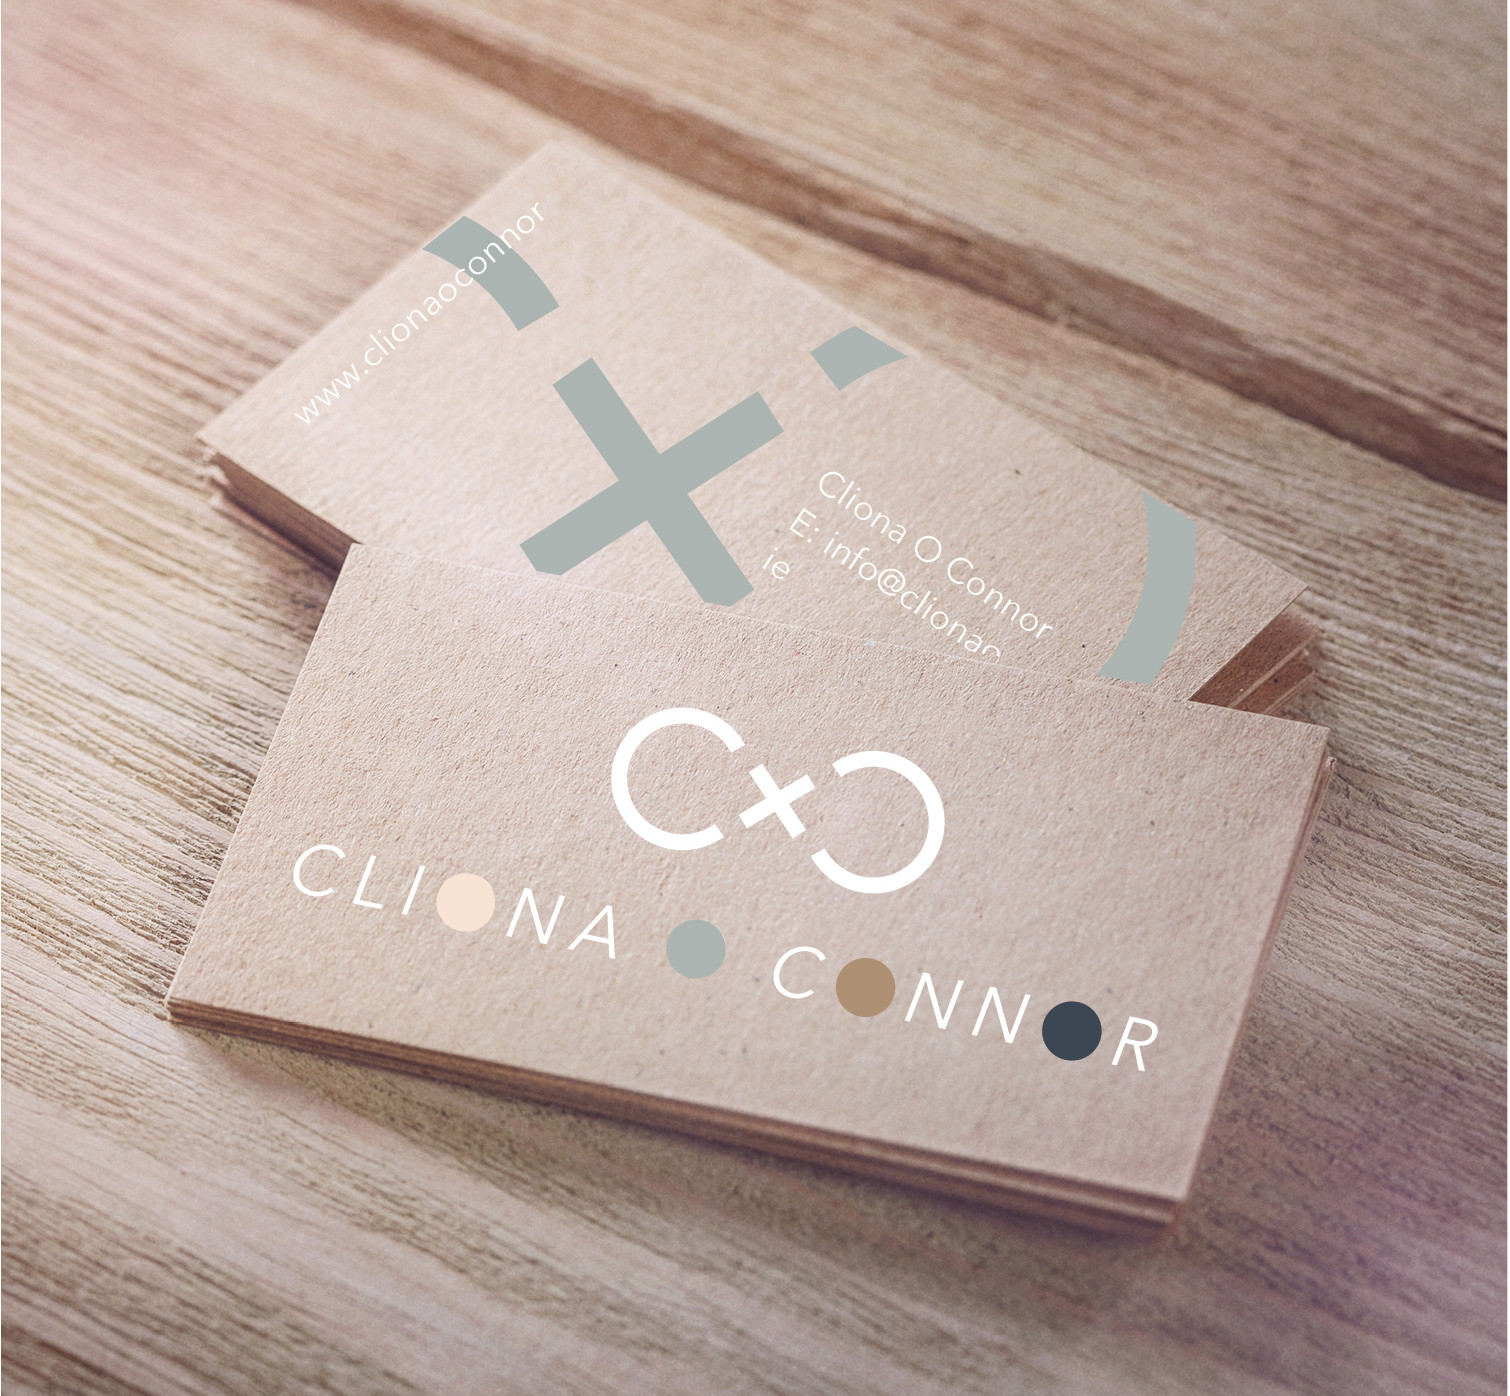 Limelight Media Cork | Cliona O’Connor | PR agency, Graphic design, Advertising,  Cork